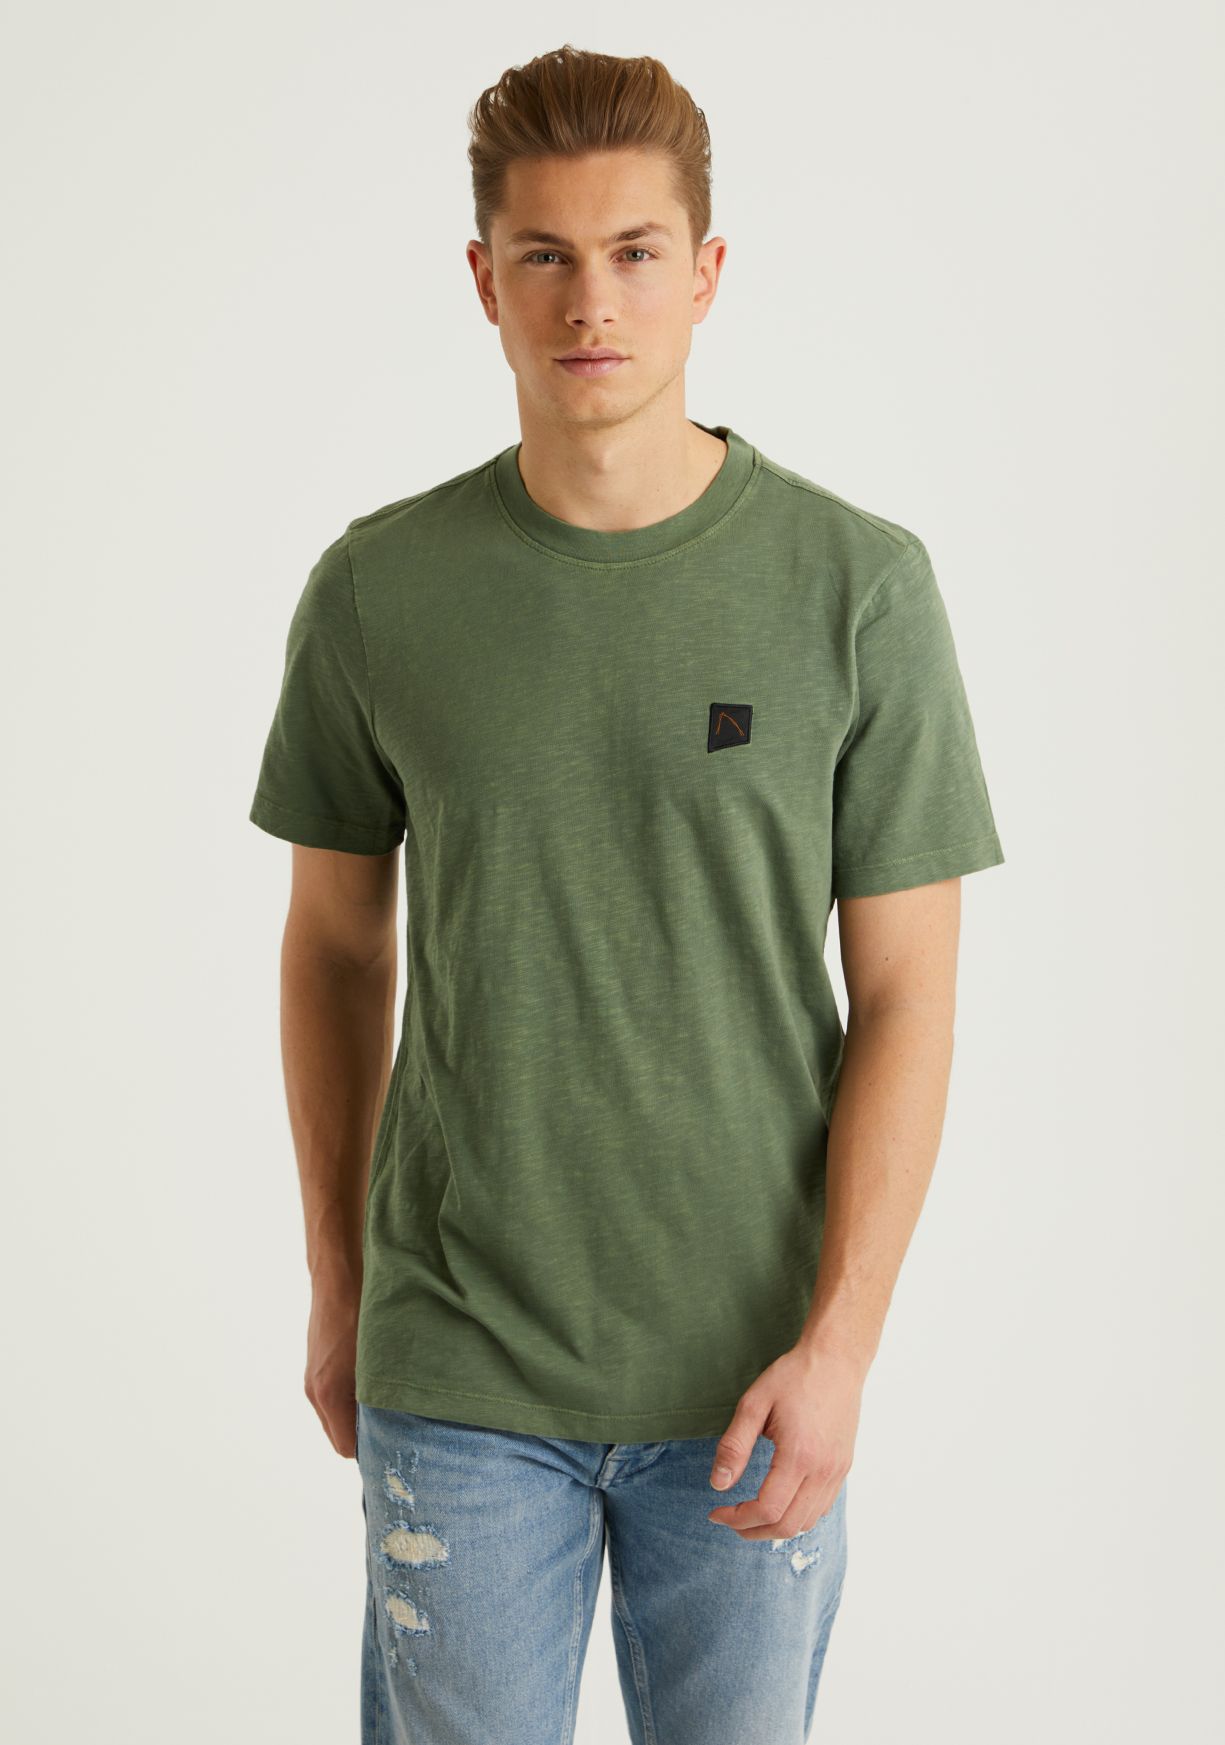 Chasin Herren T-Shirt Ethan grün 5211357034 E50 army